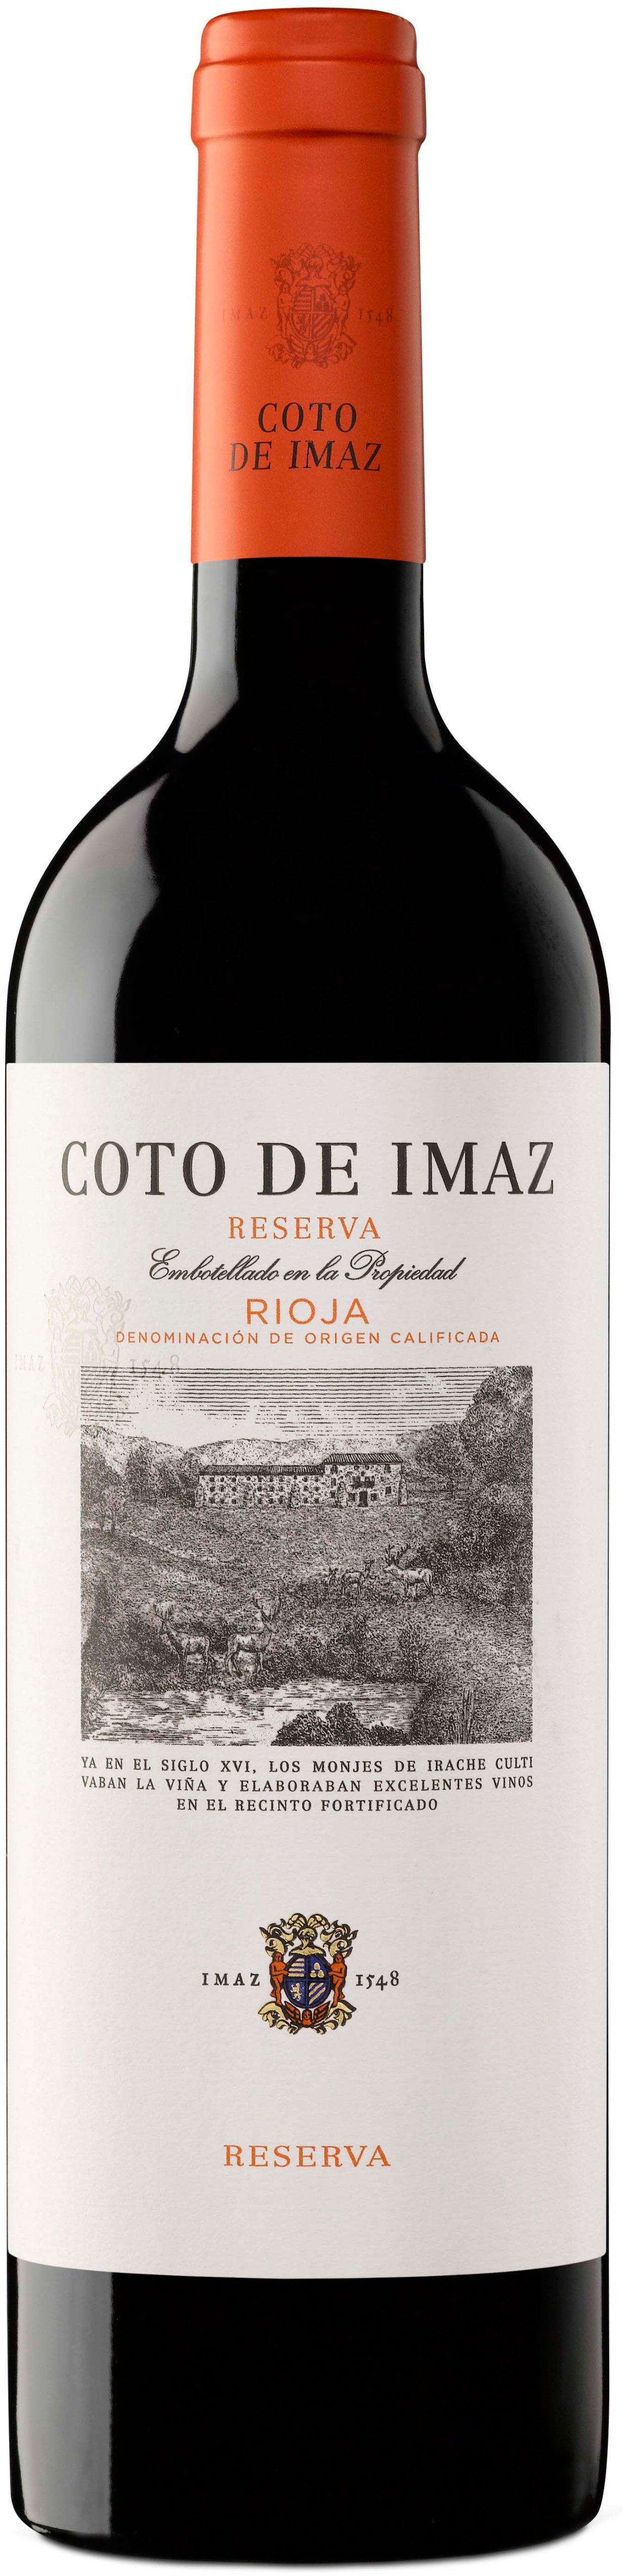 El Coto de Rioja Rioja Gran Reserva Coto de Imaz 2015